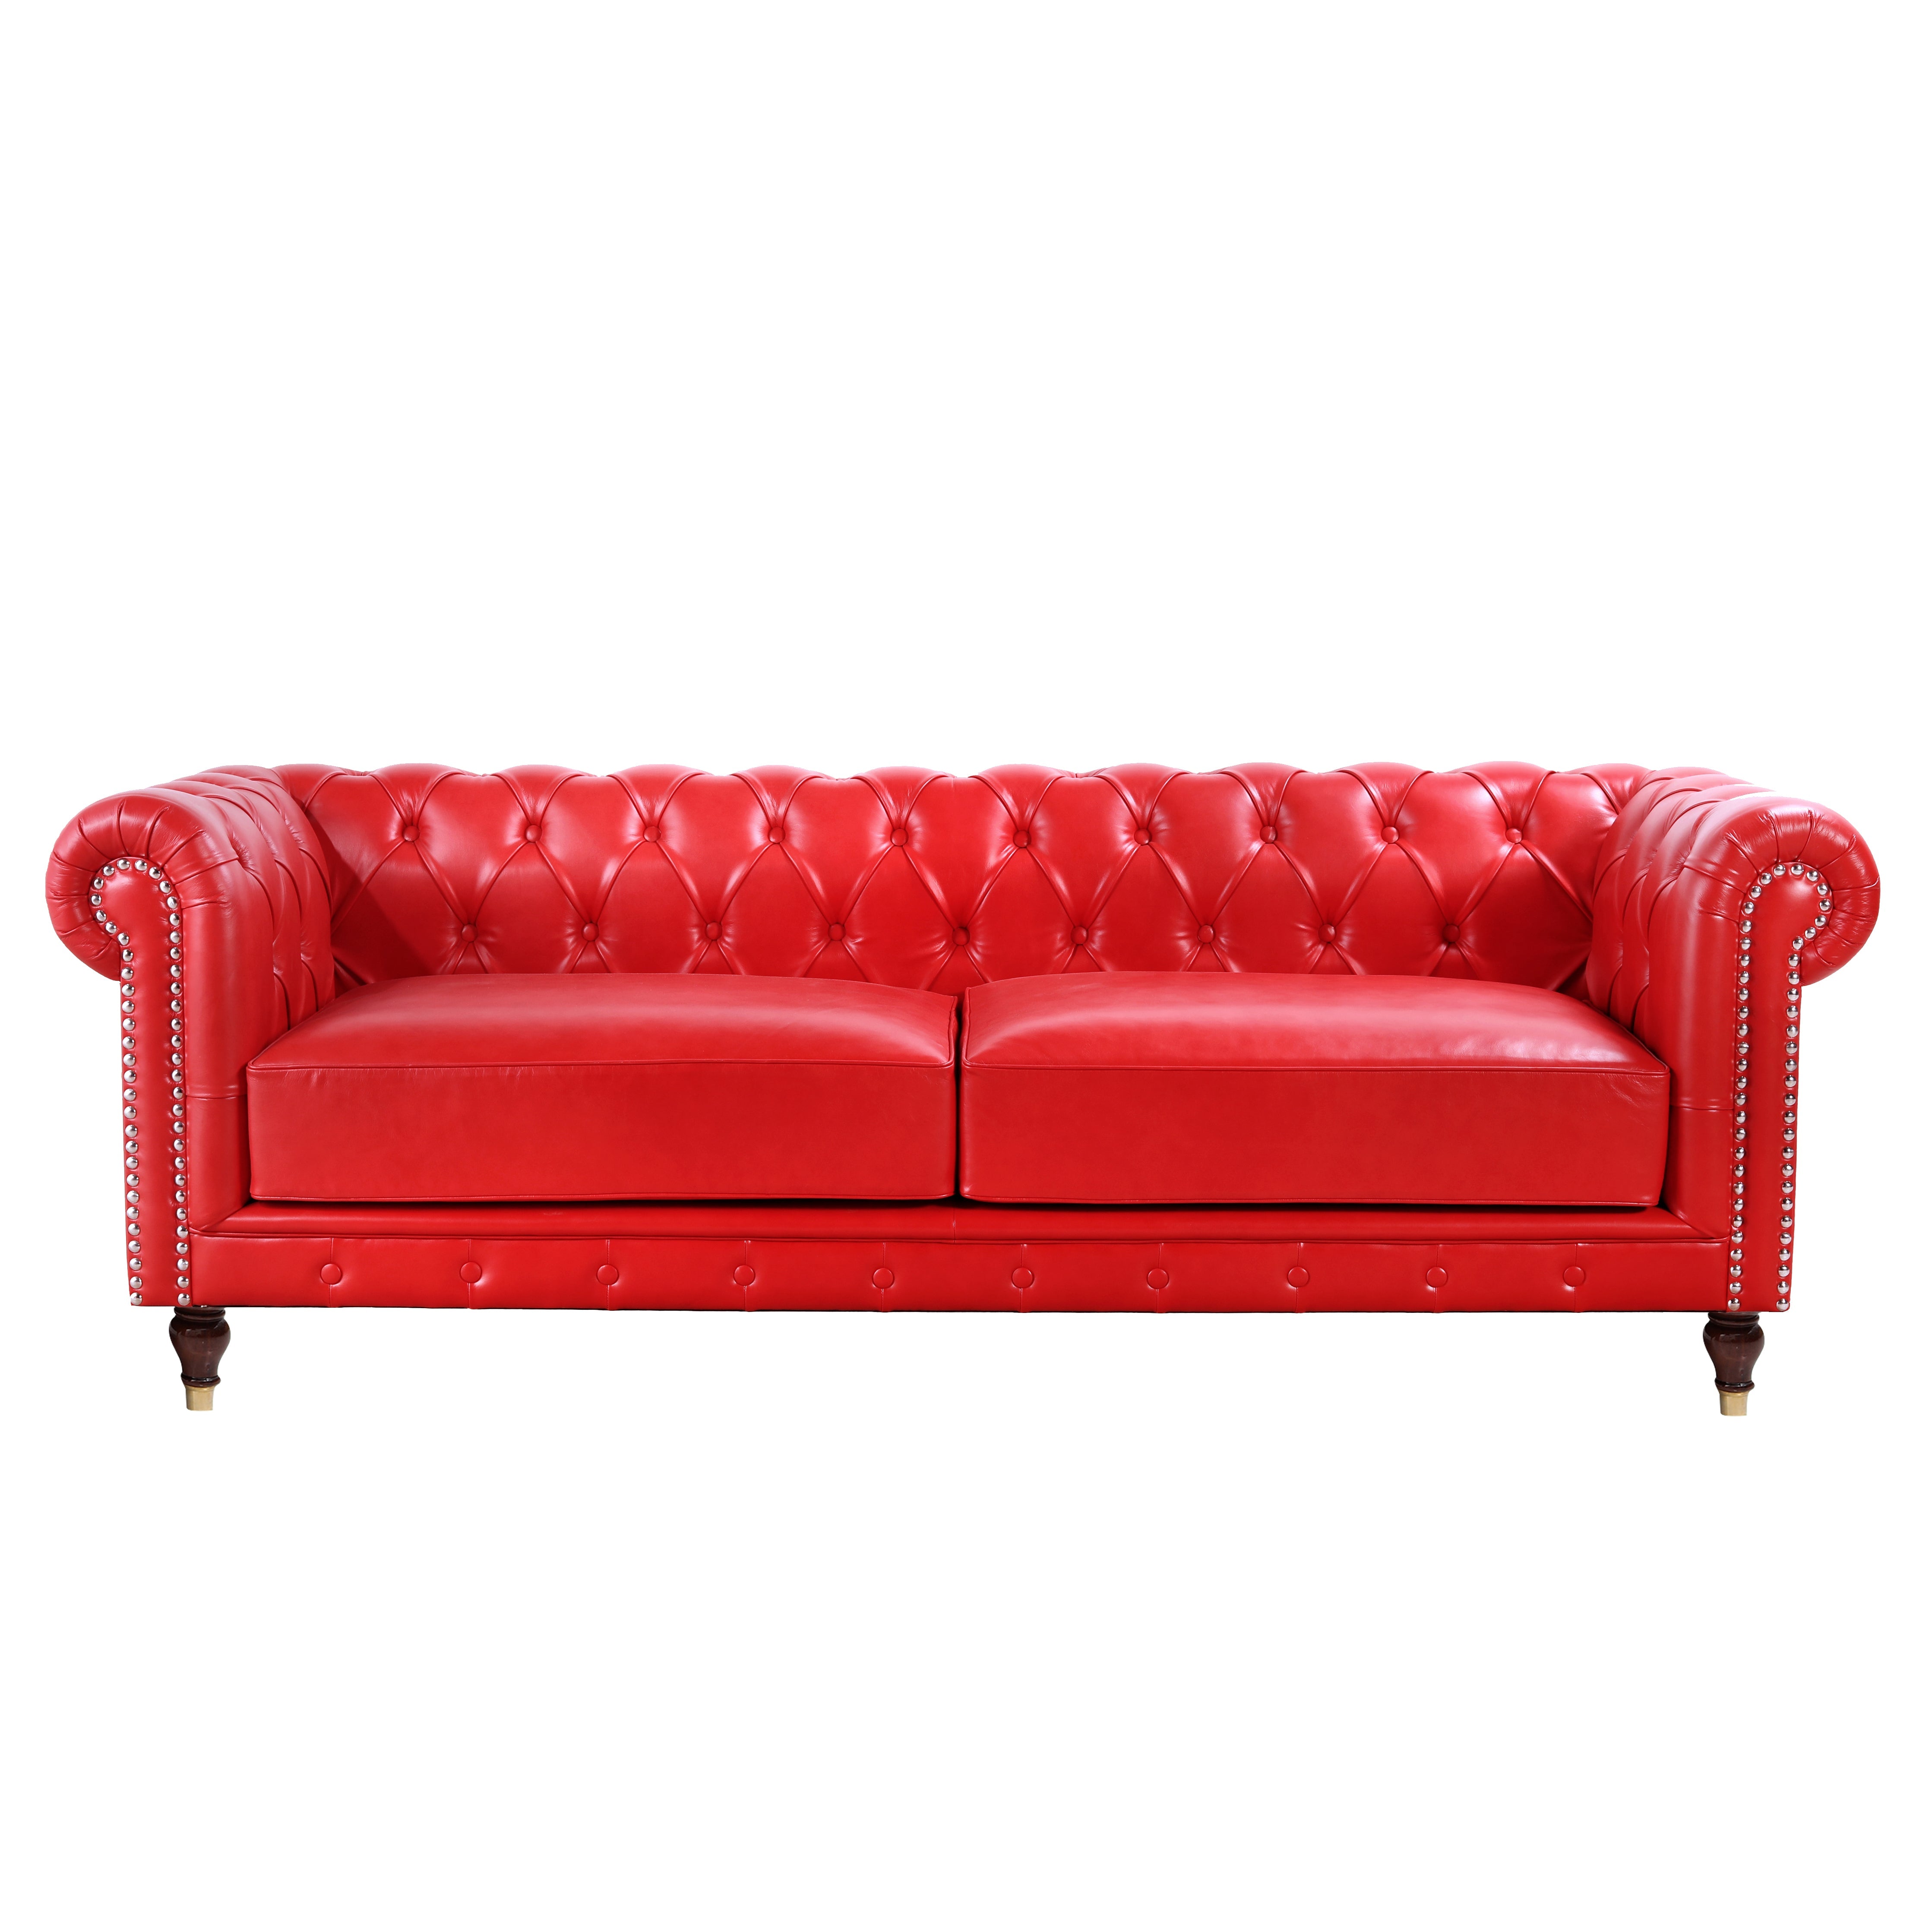 Larson M Leather Sofa Red